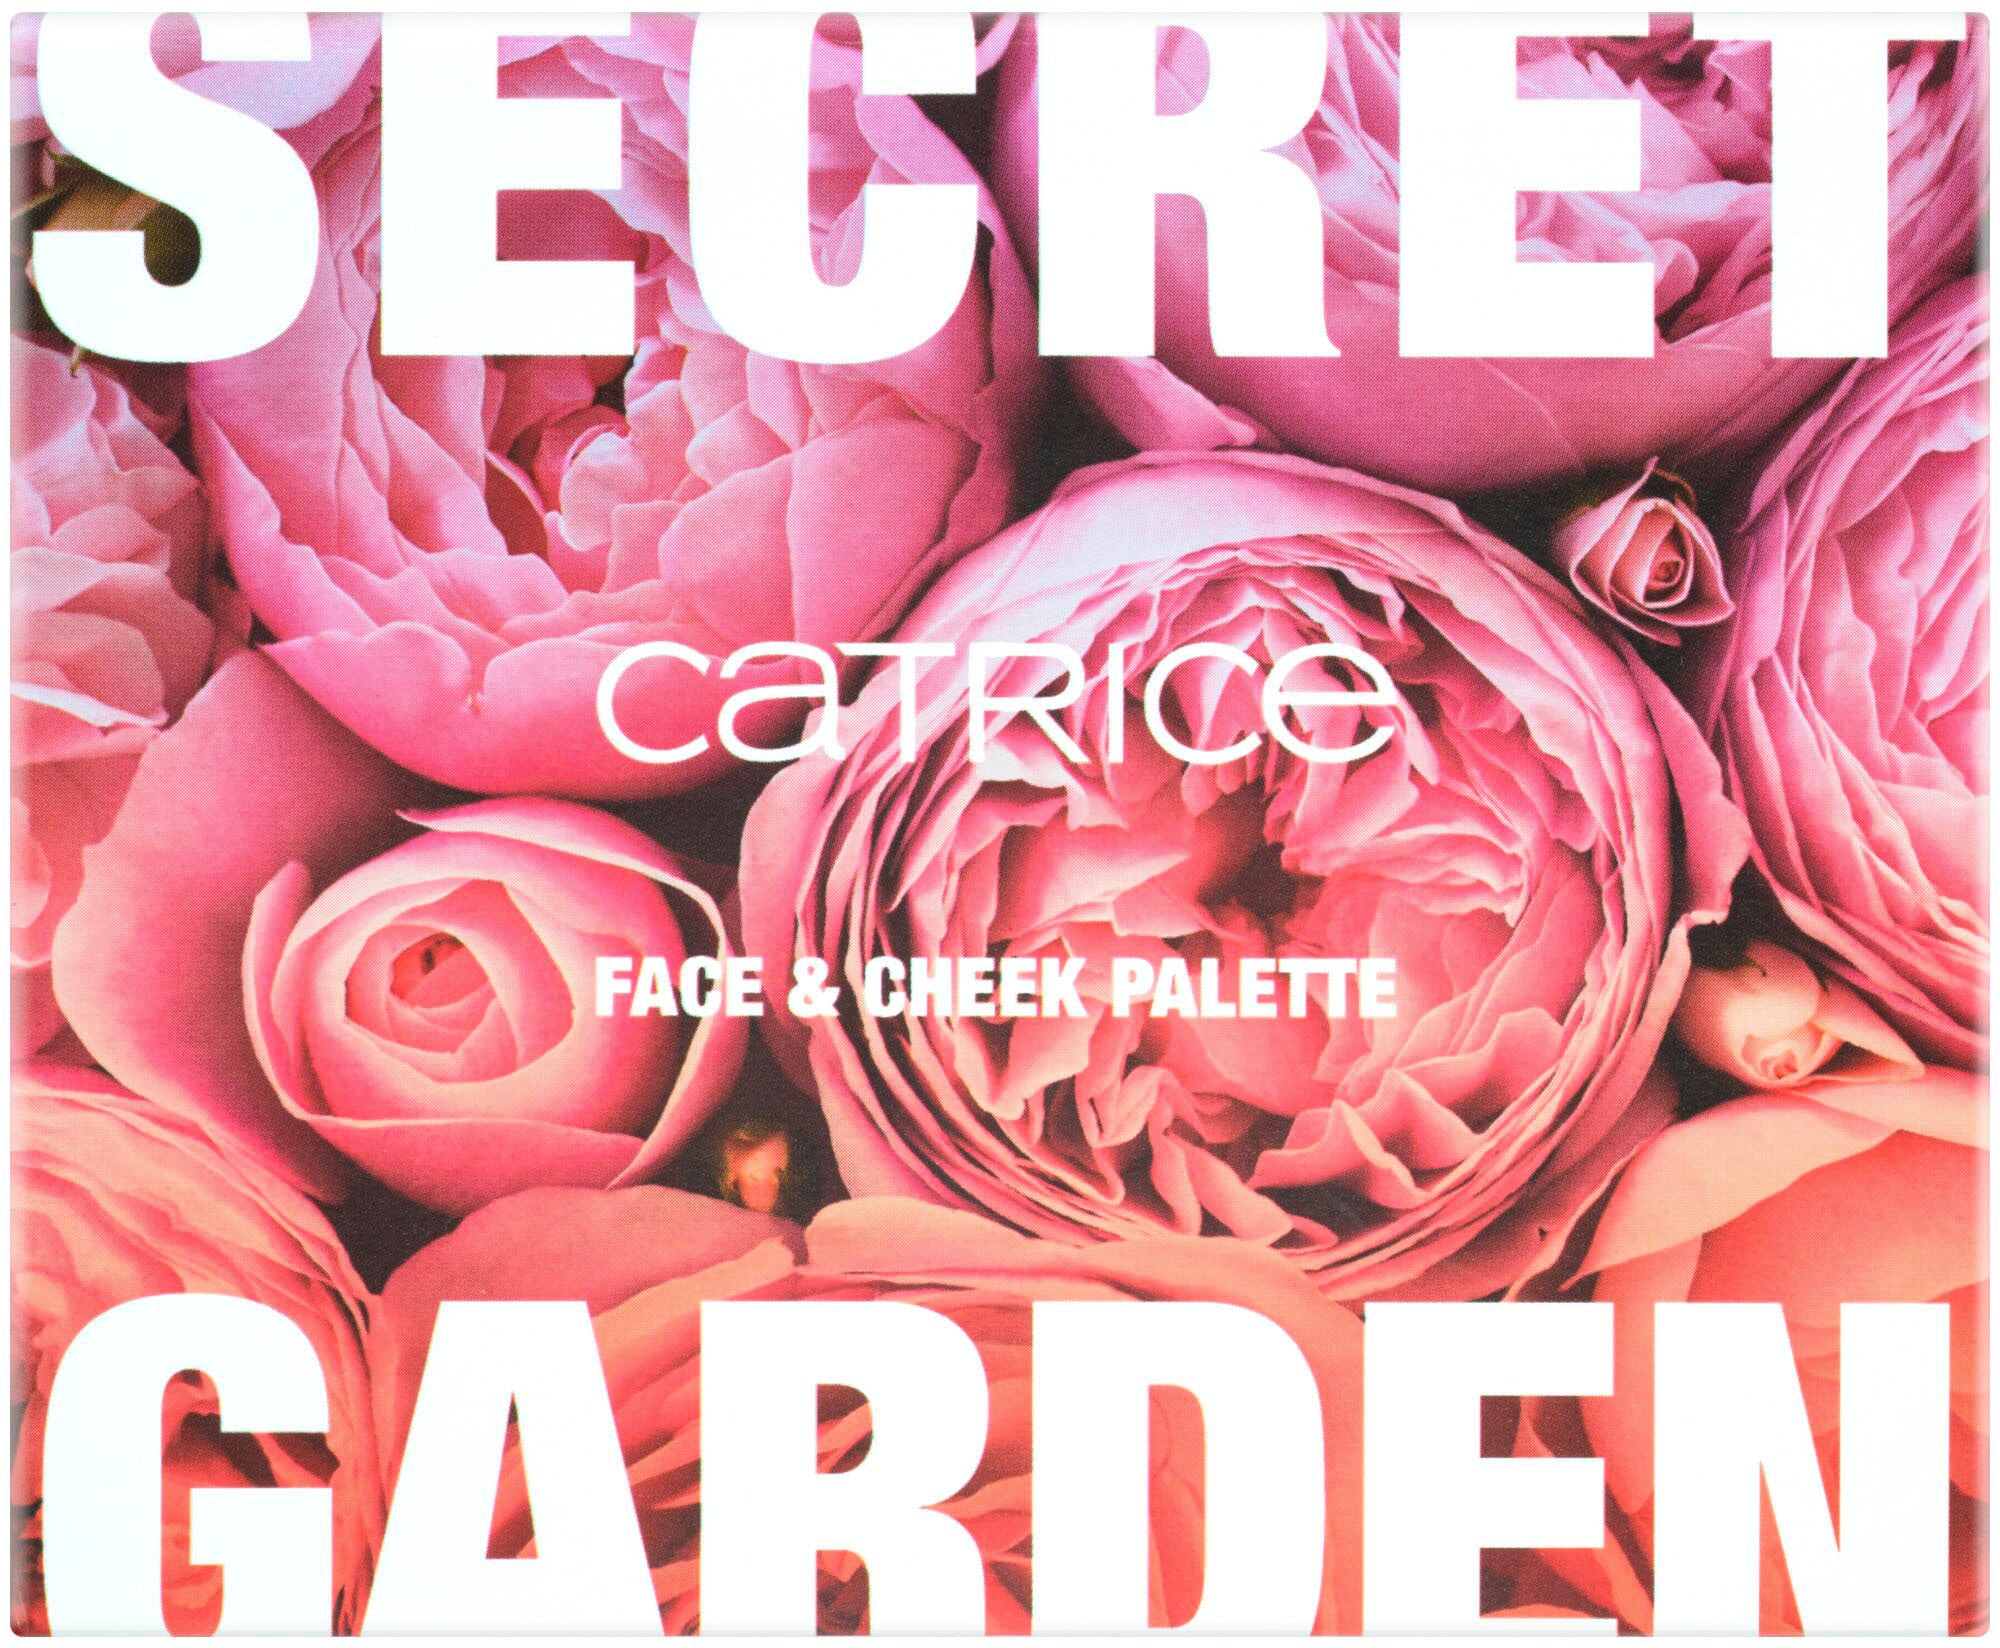 Catrice Highlighter-Palette »SECRET online Face & | Palette« bestellen GARDEN BAUR Cheek